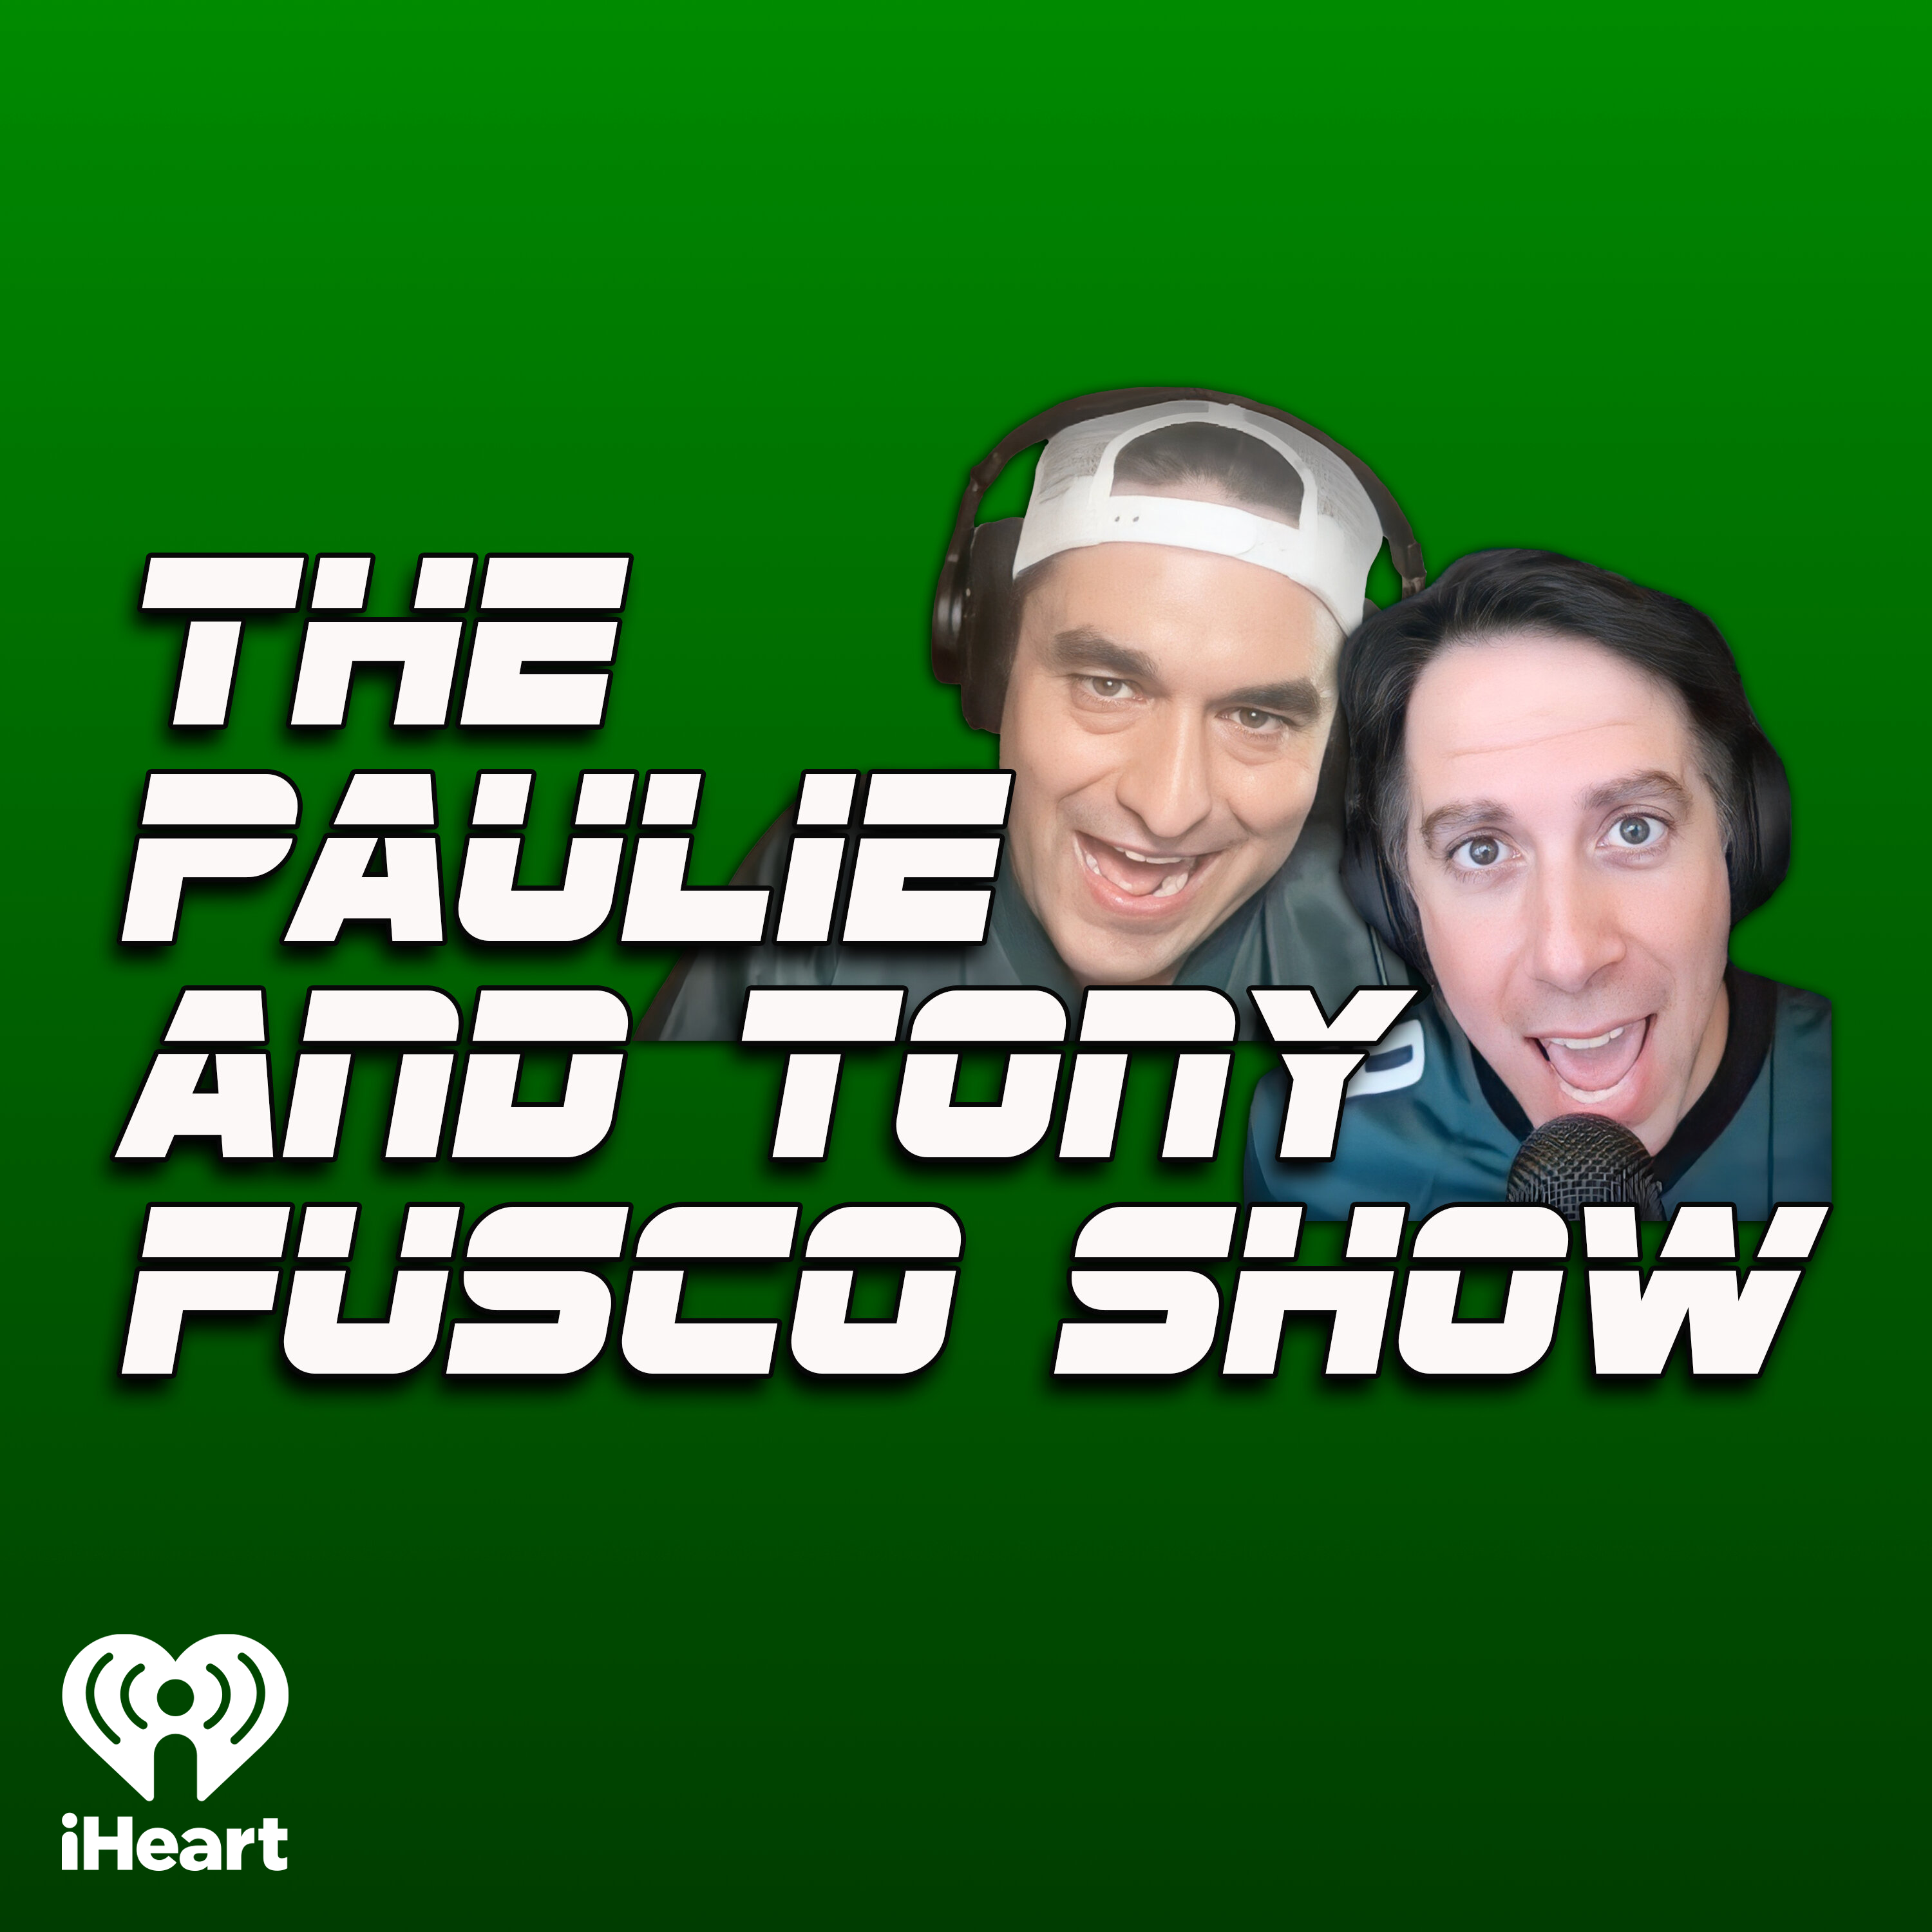 The Paulie & Tony Fusco Show: Our MUCH FUNNIER roast of Tom Brady & Dak Prescott